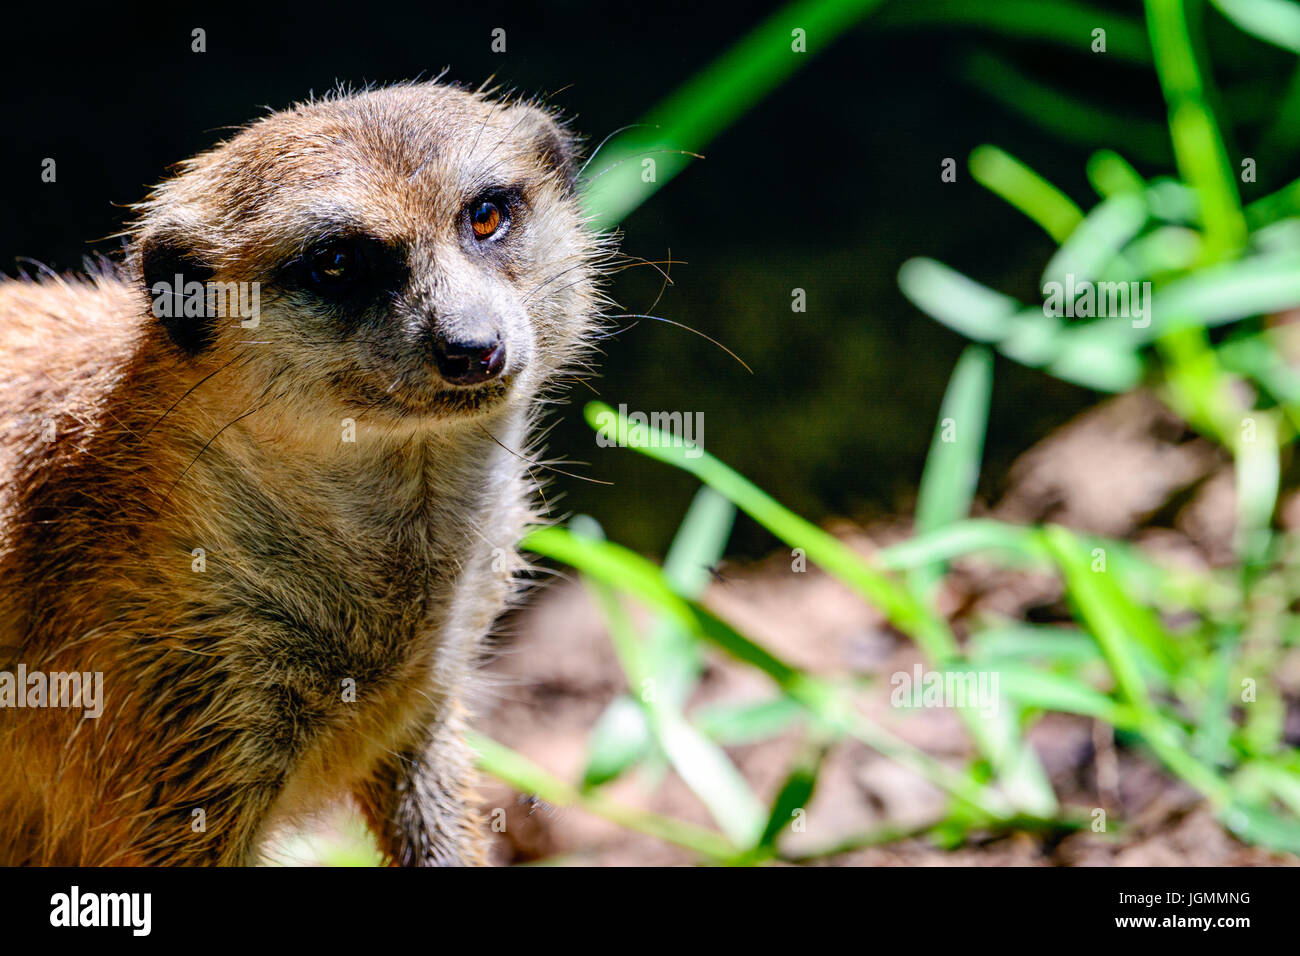 meerkat or suricate (Suricata suricatta) facing forward. Close-up Stock Photo